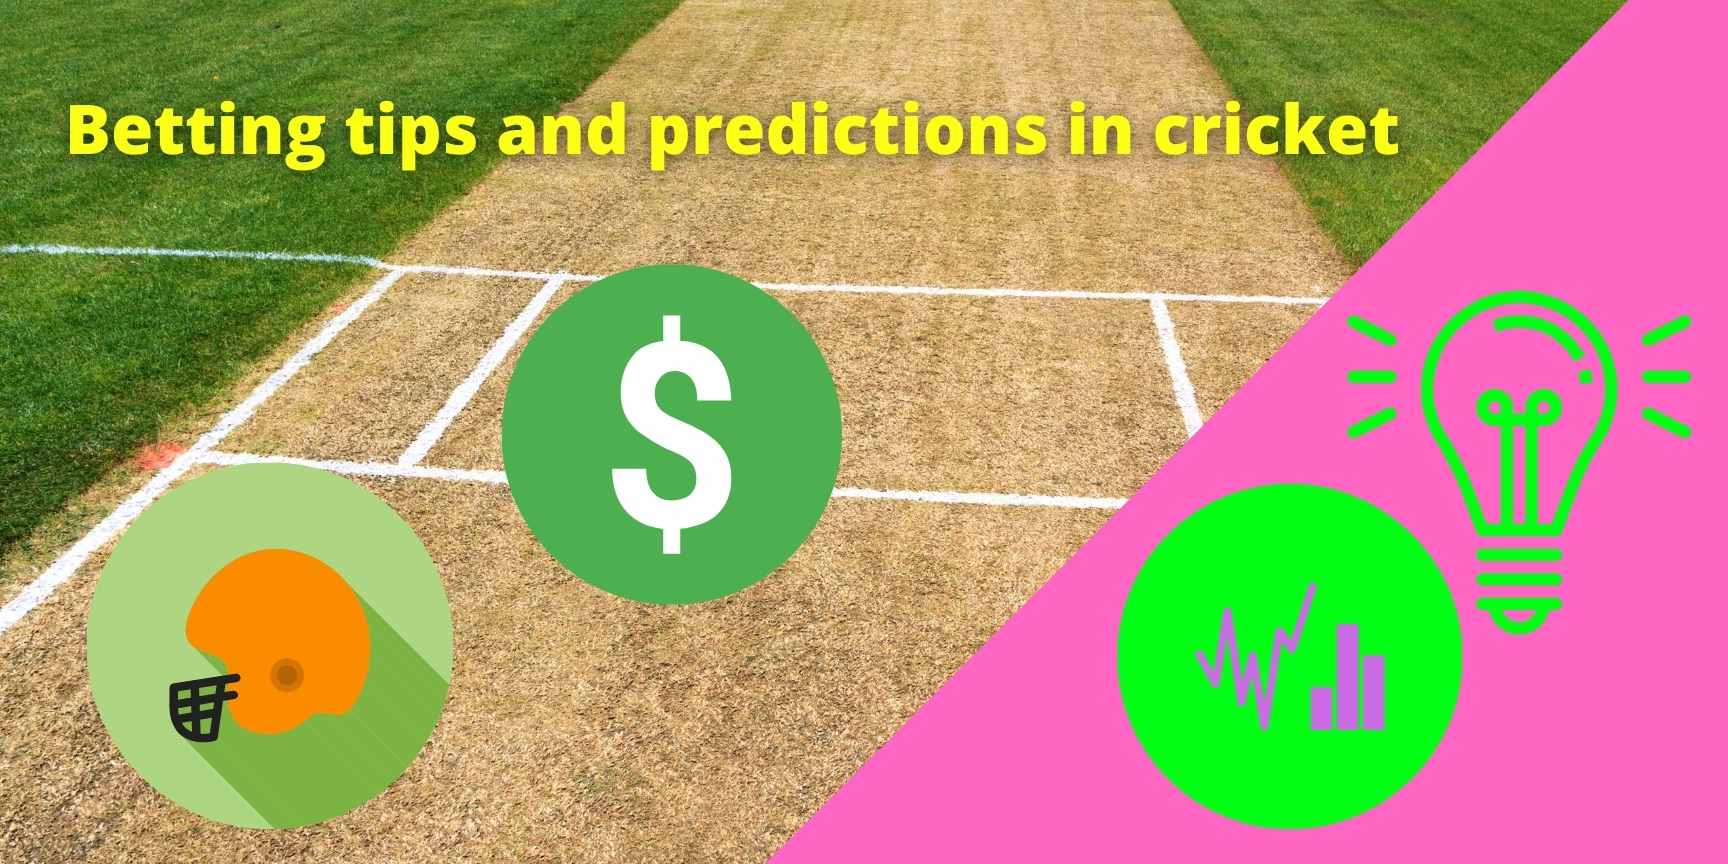 cricket tips